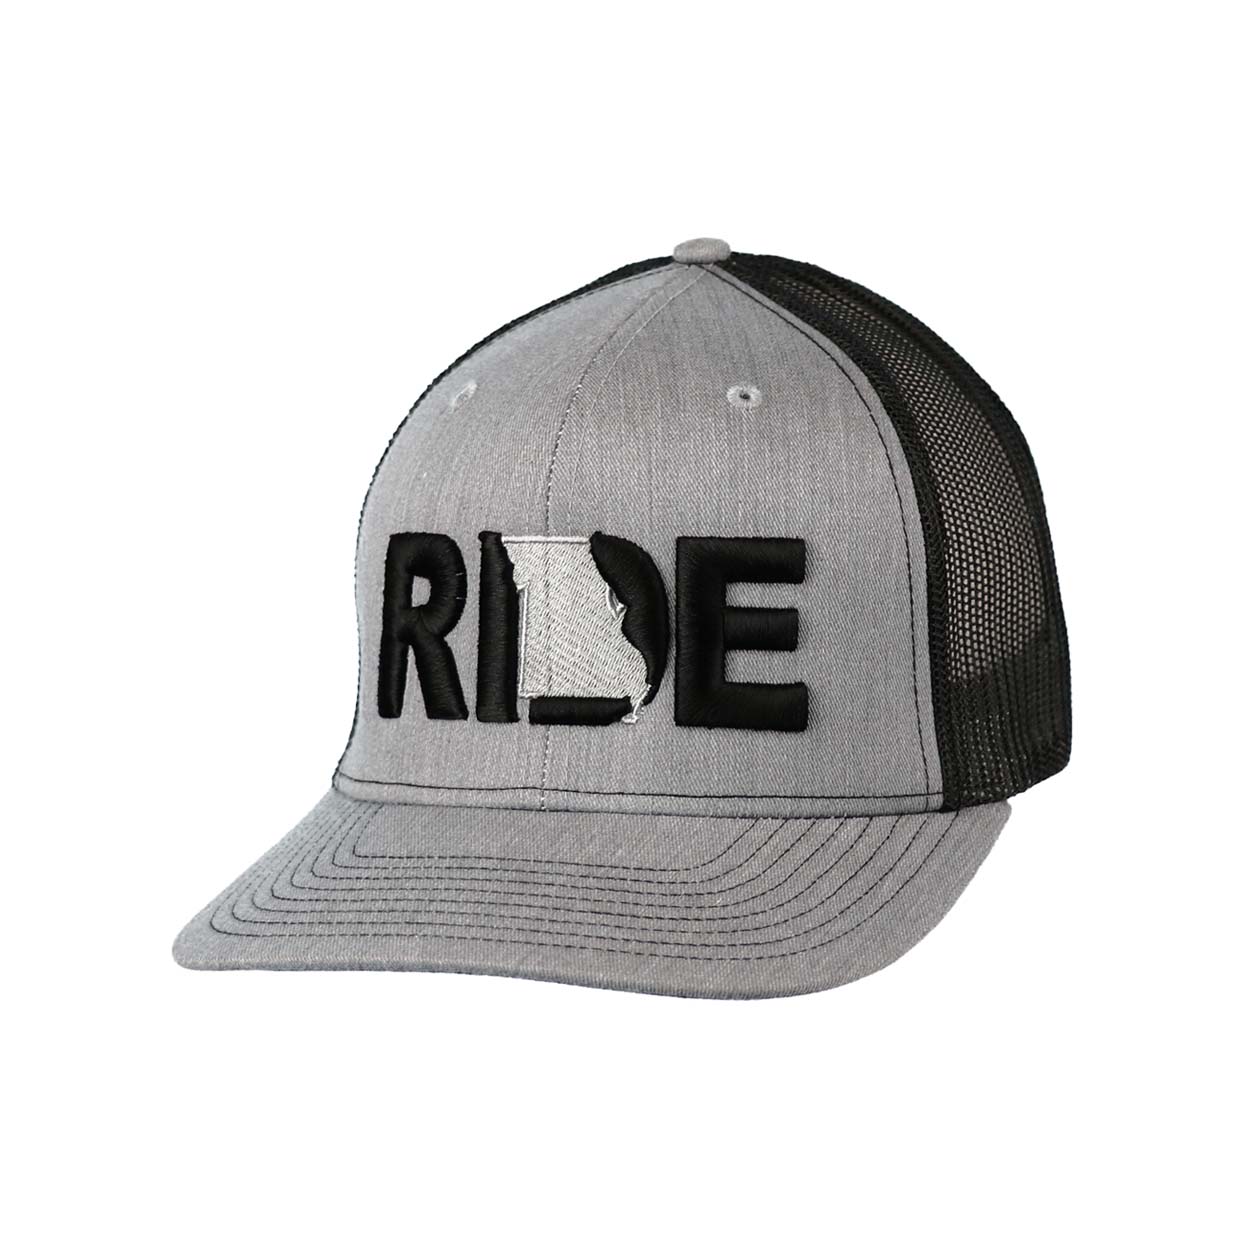 Ride Missouri Classic Pro 3D Puff Embroidered Snapback Trucker Hat Heather Gray/Black